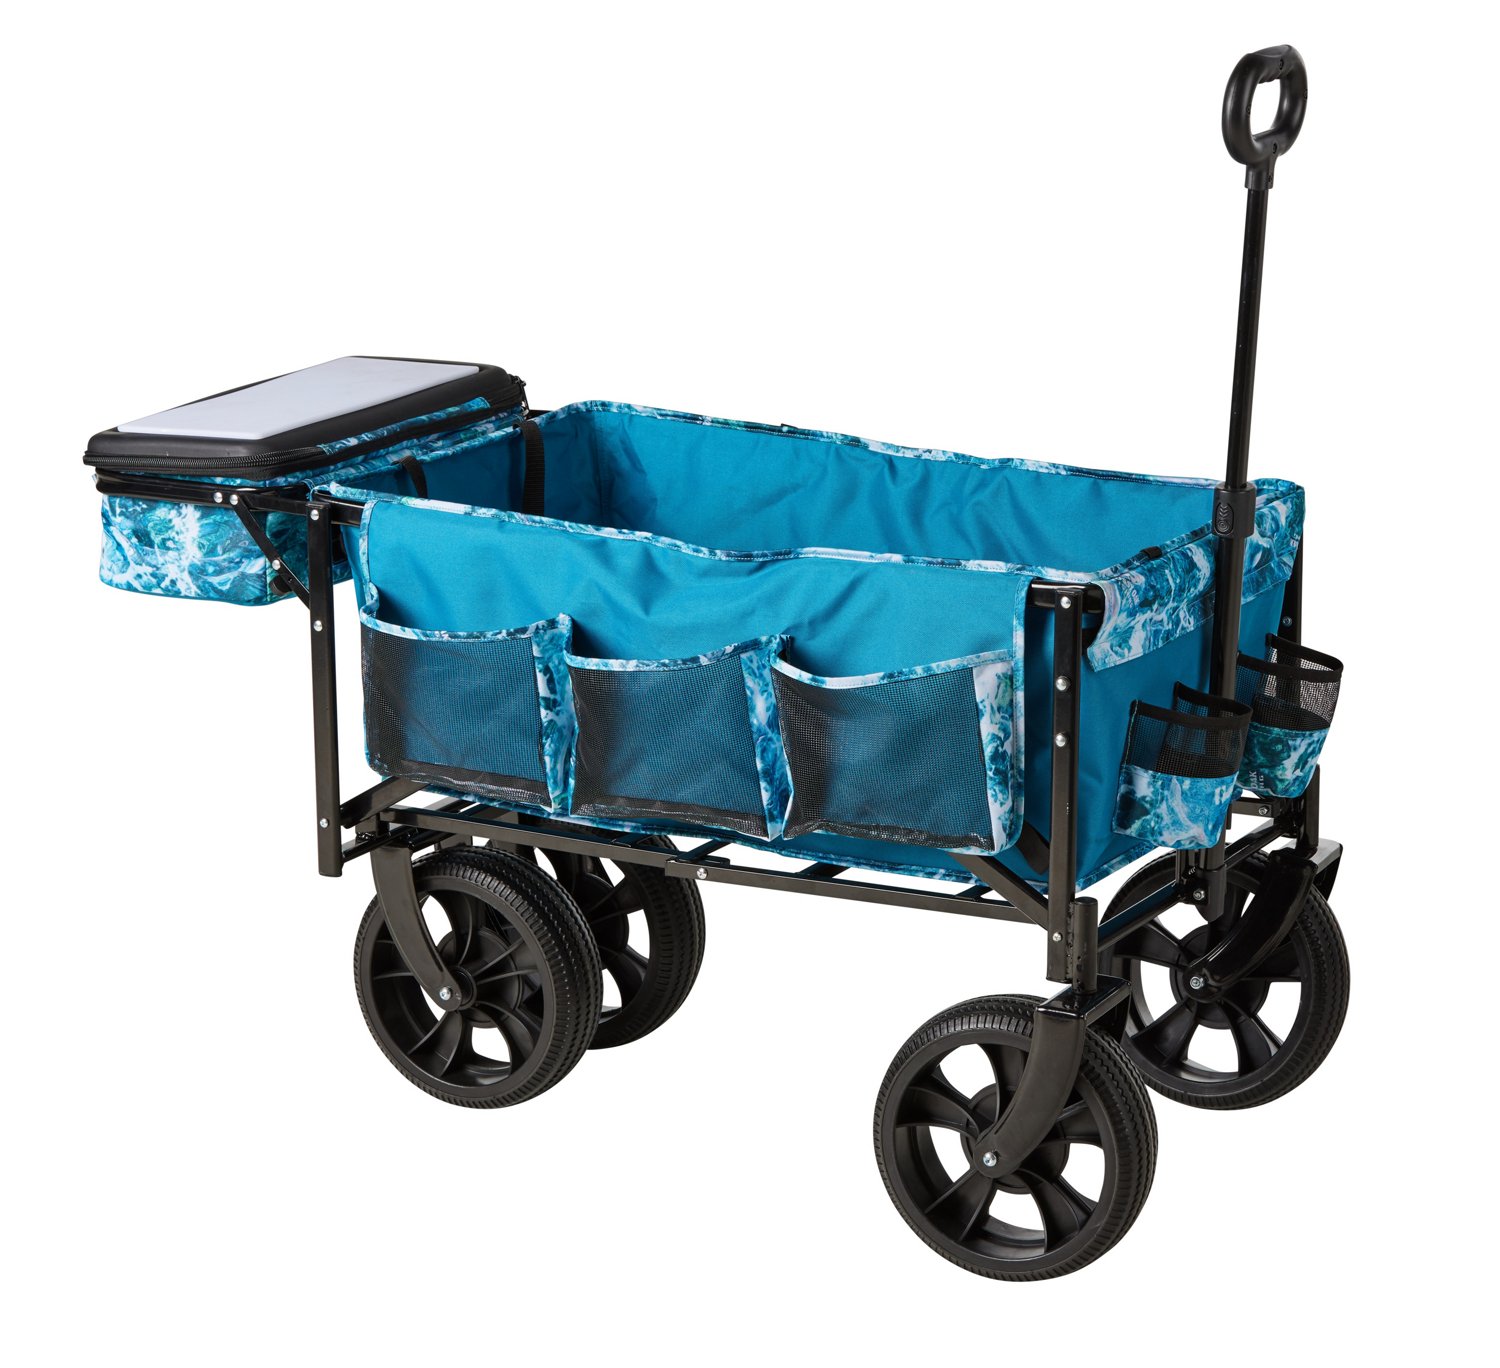  Fishing Cart Wagon - Holds 5 Fishing Poles – Portable